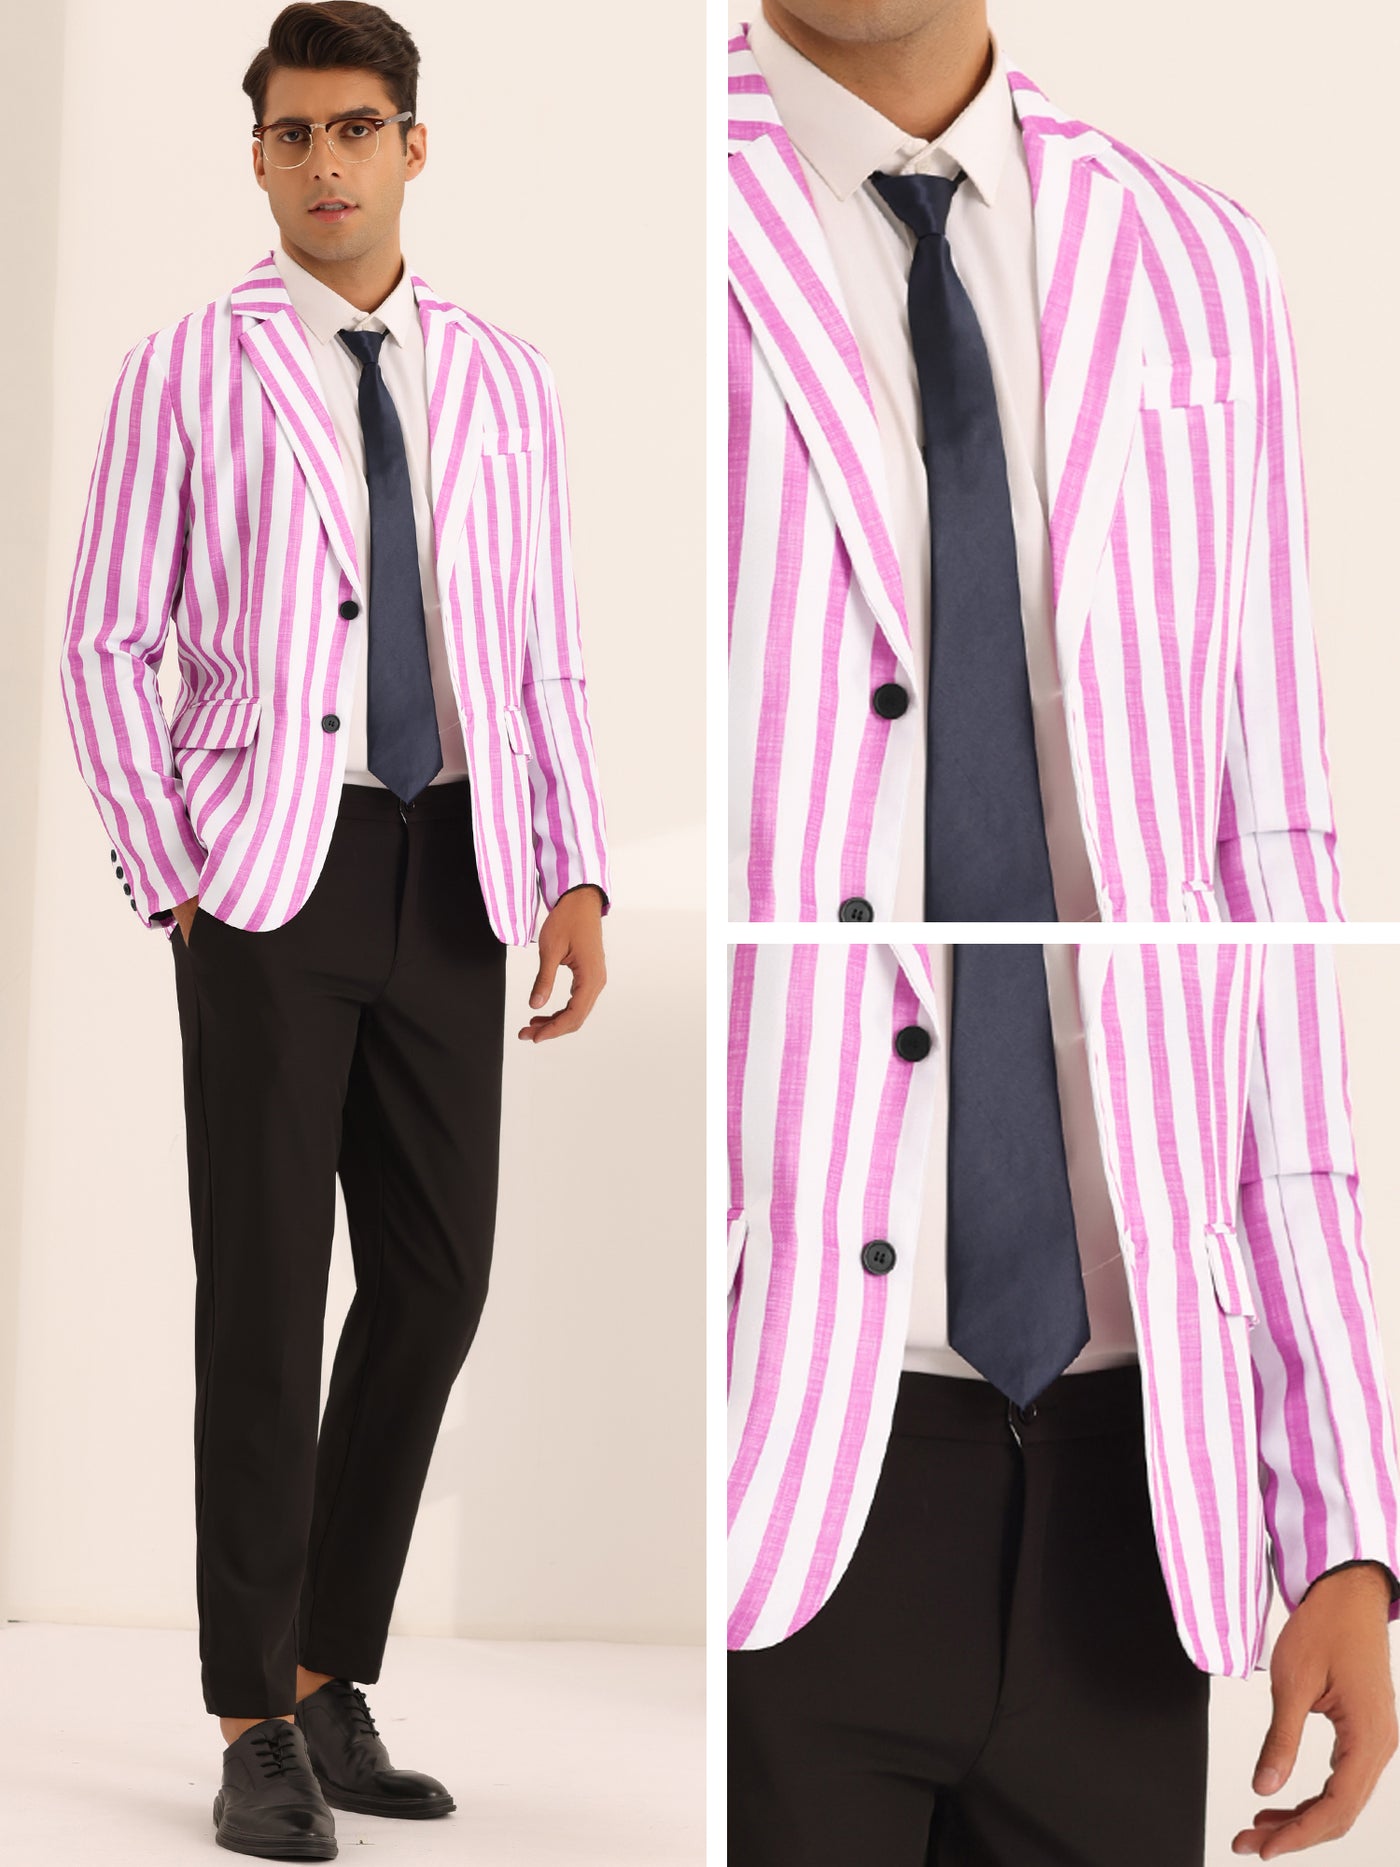 Bublédon Striped Sports Coat for Men's Notch Lapel Color Block Stripes Pattern Blazer